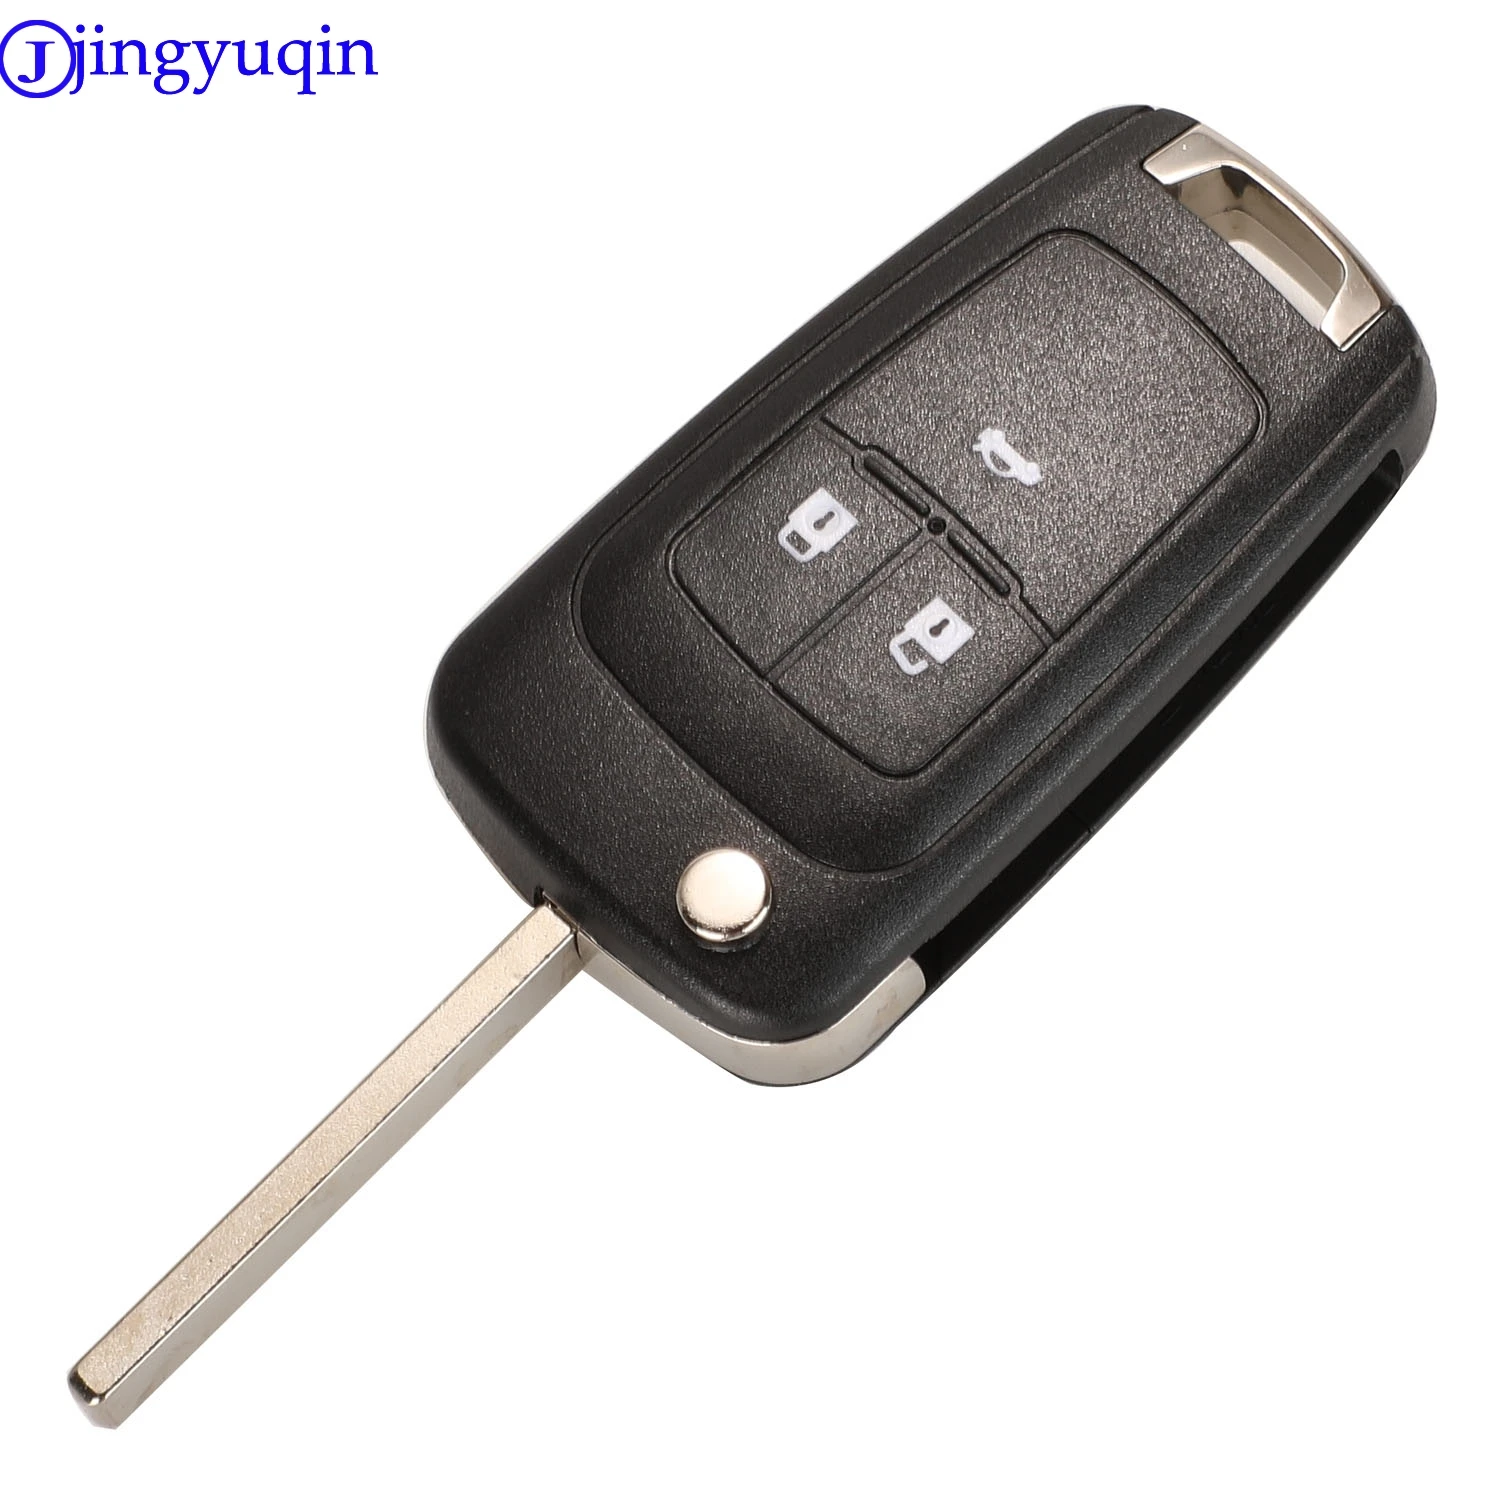 

jingyuqin 3B Folding Remote Car Key Shell For Chevrolet Cruze Epica Lova Camaro Impala 2 3 4 5 Button HU100 Blade Case Cover